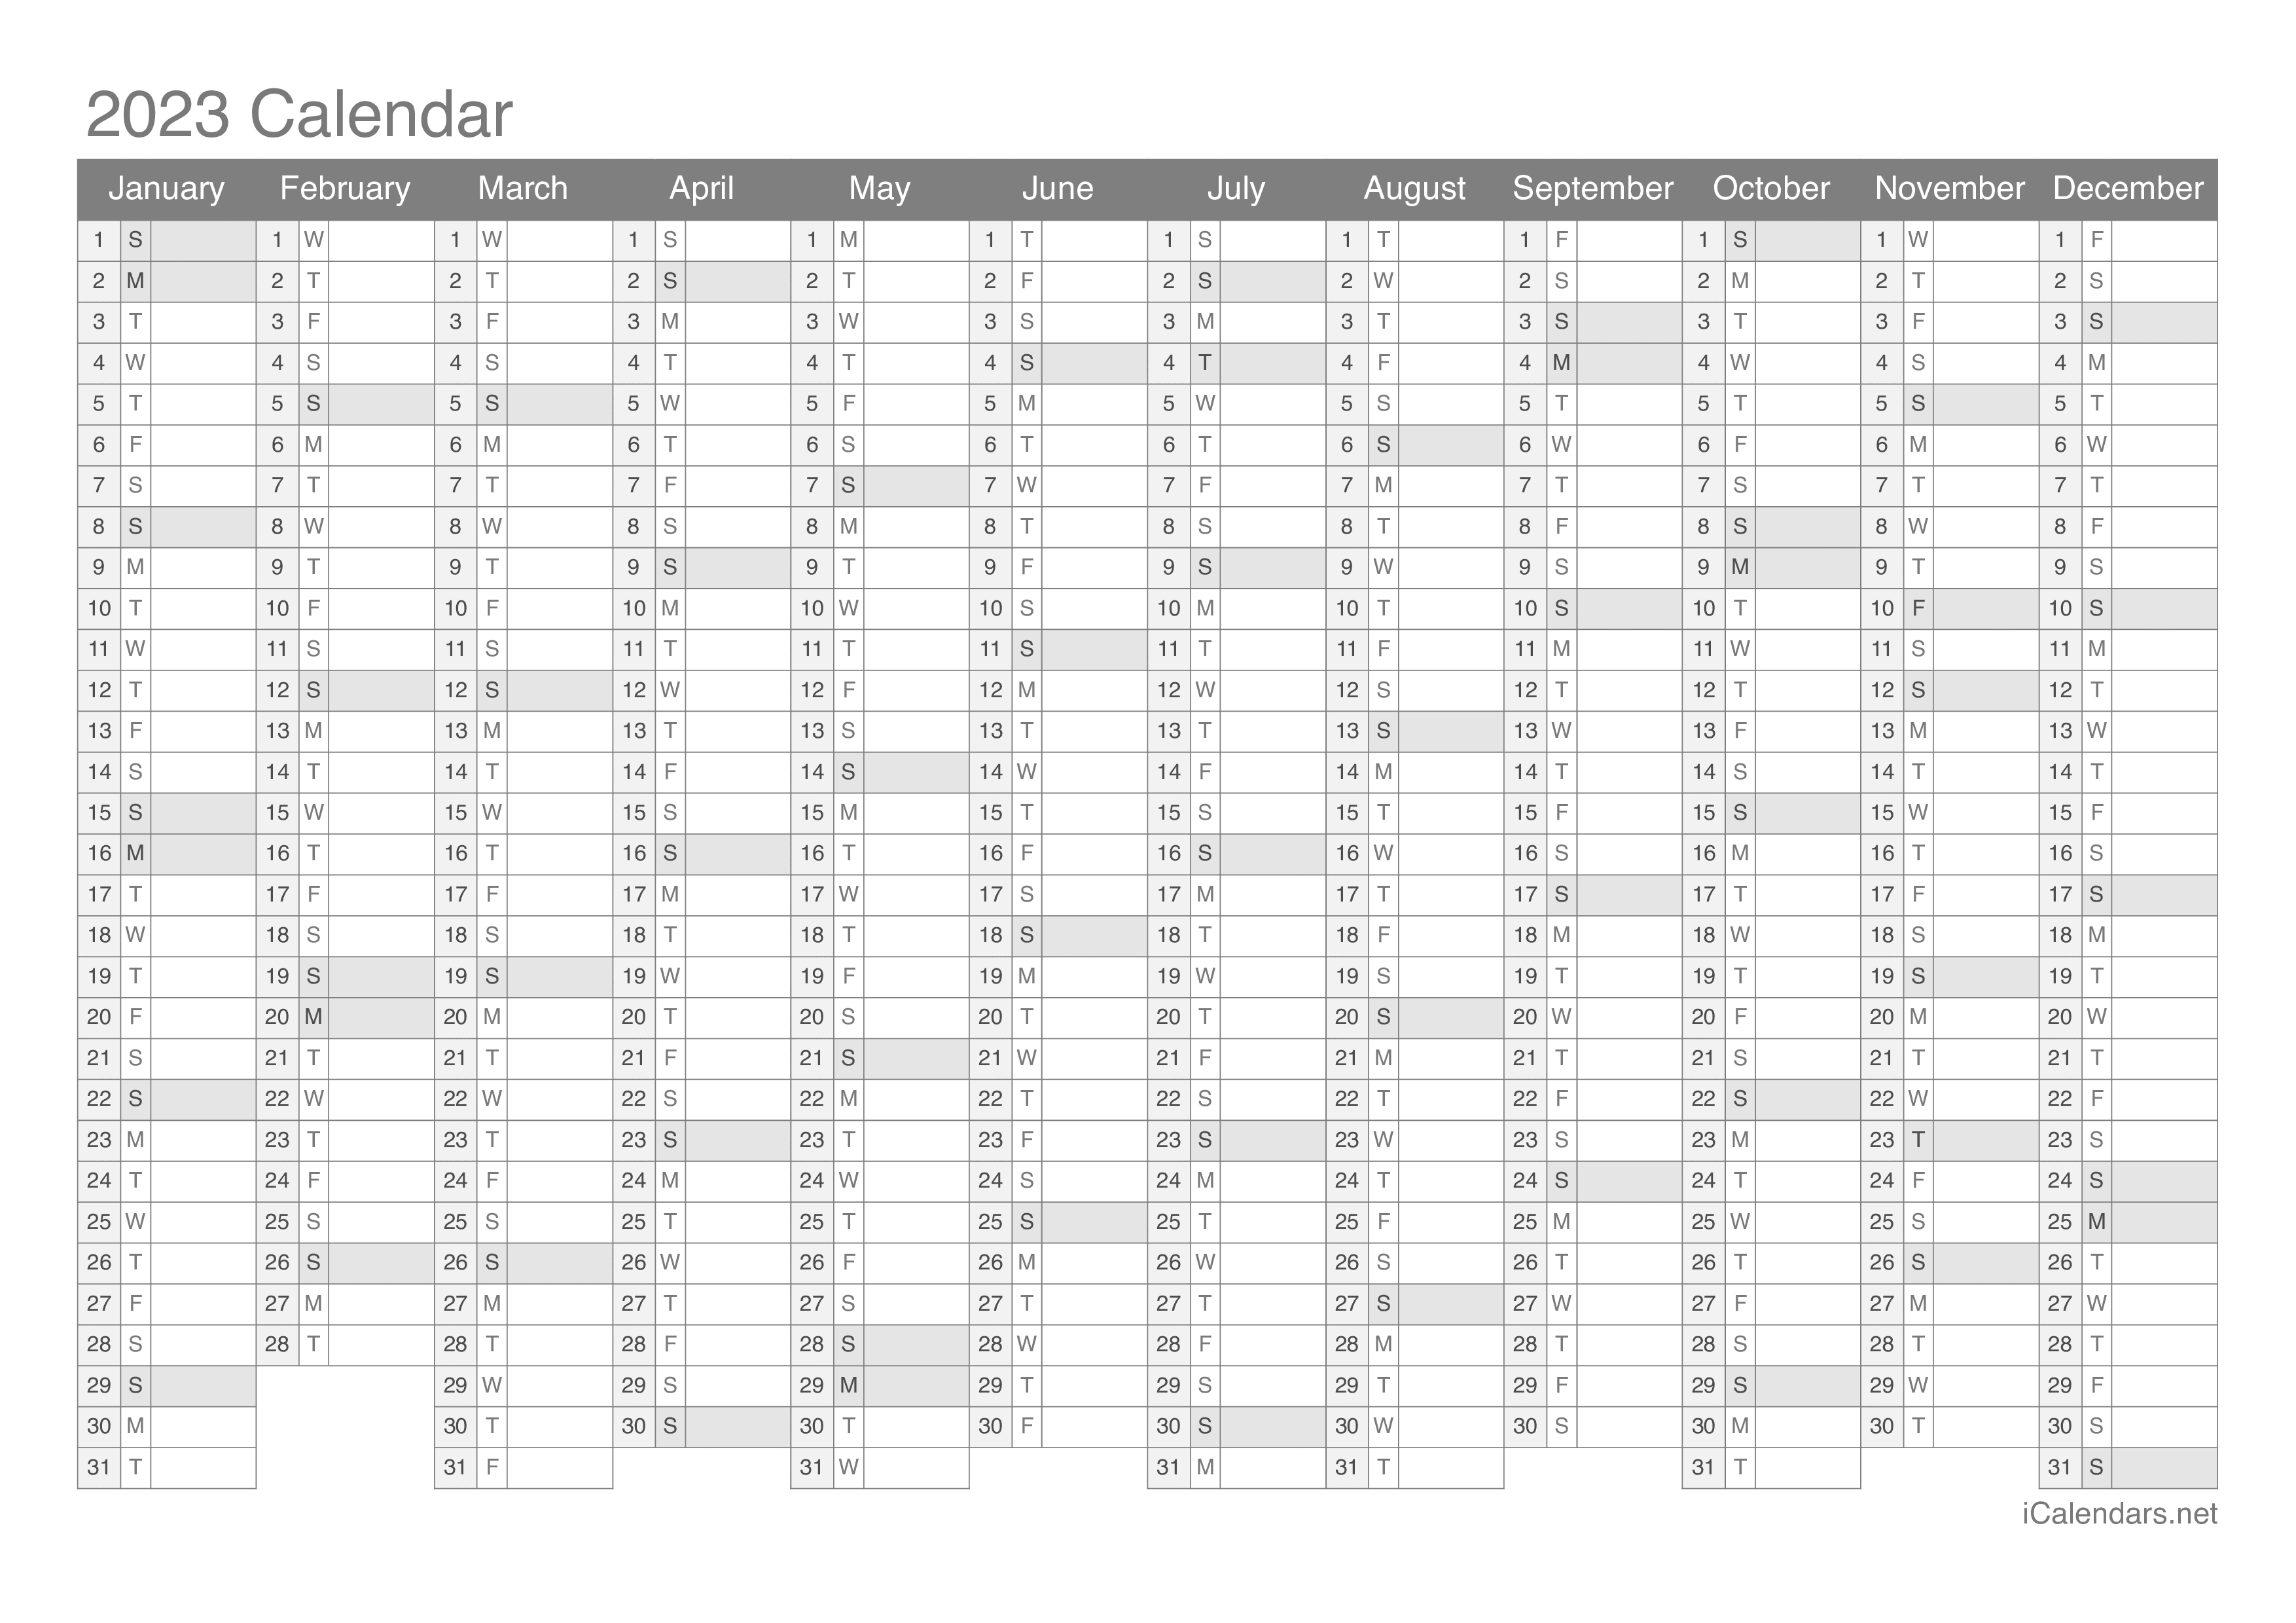 2023 Printable Calendar - PDF or Excel - icalendars.net